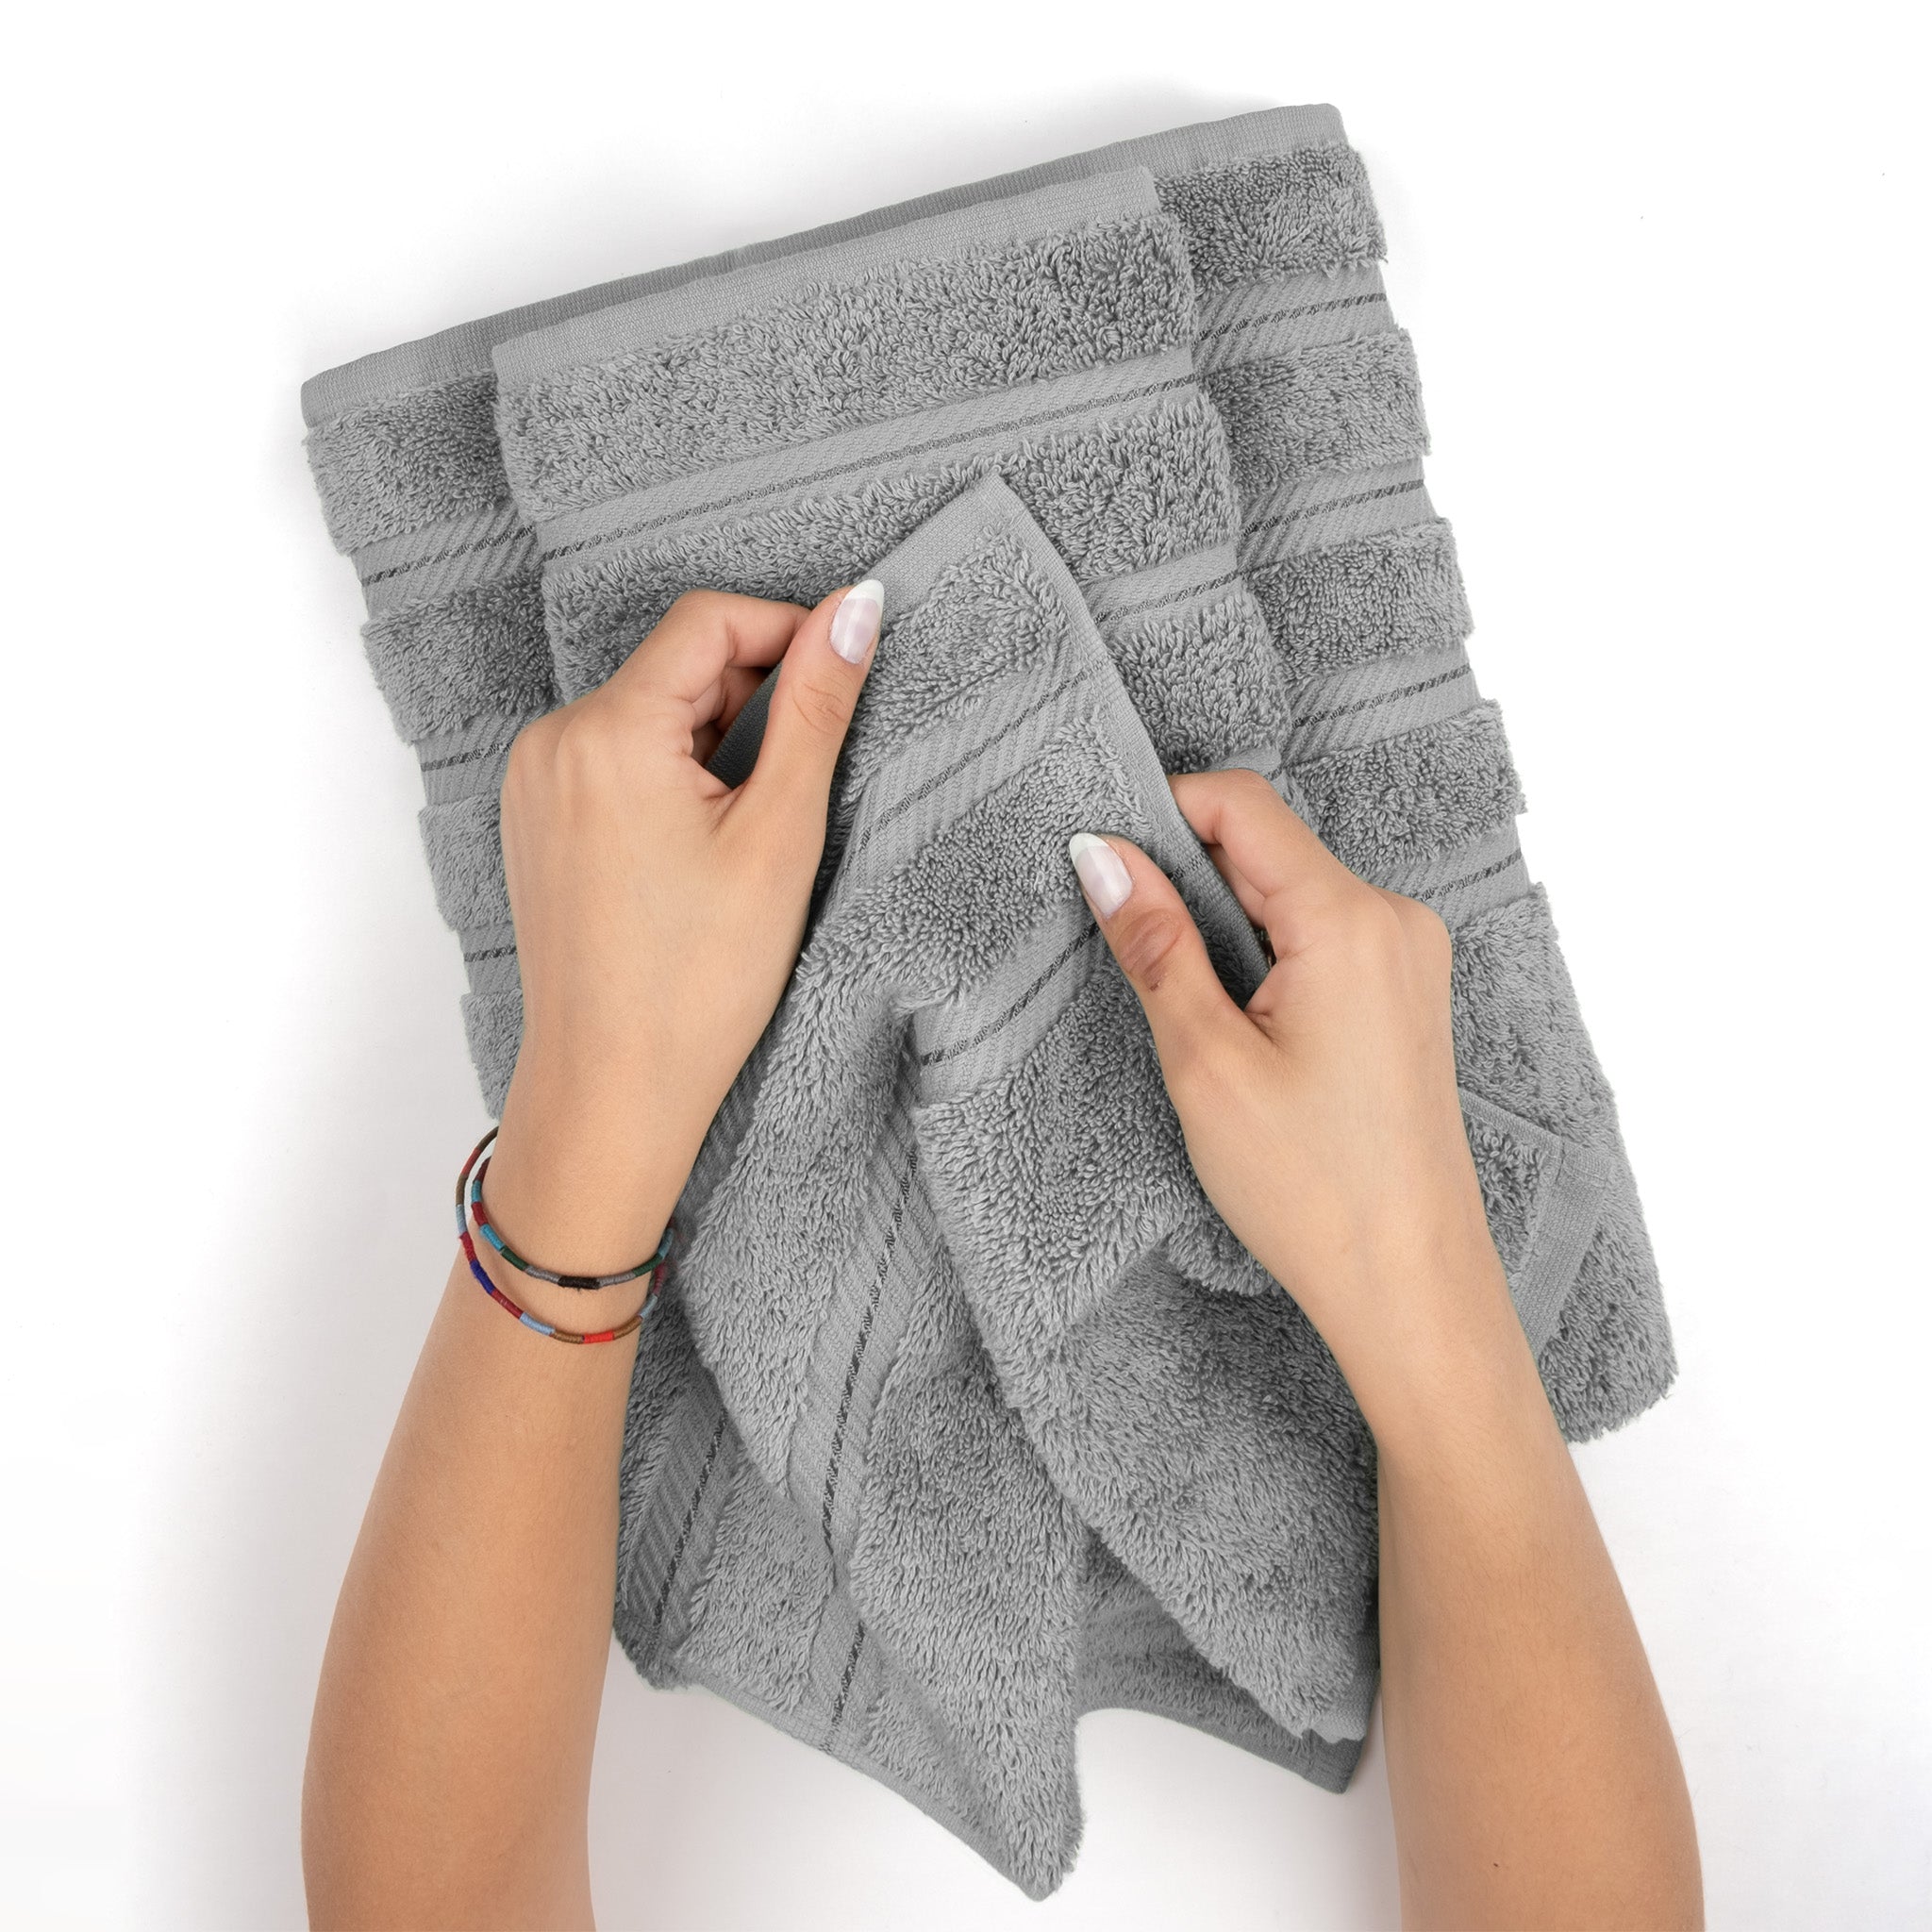 American Soft Linen 35x70 Inch 100% Turkish Cotton Jumbo Bath Sheet rockridge-gray-4